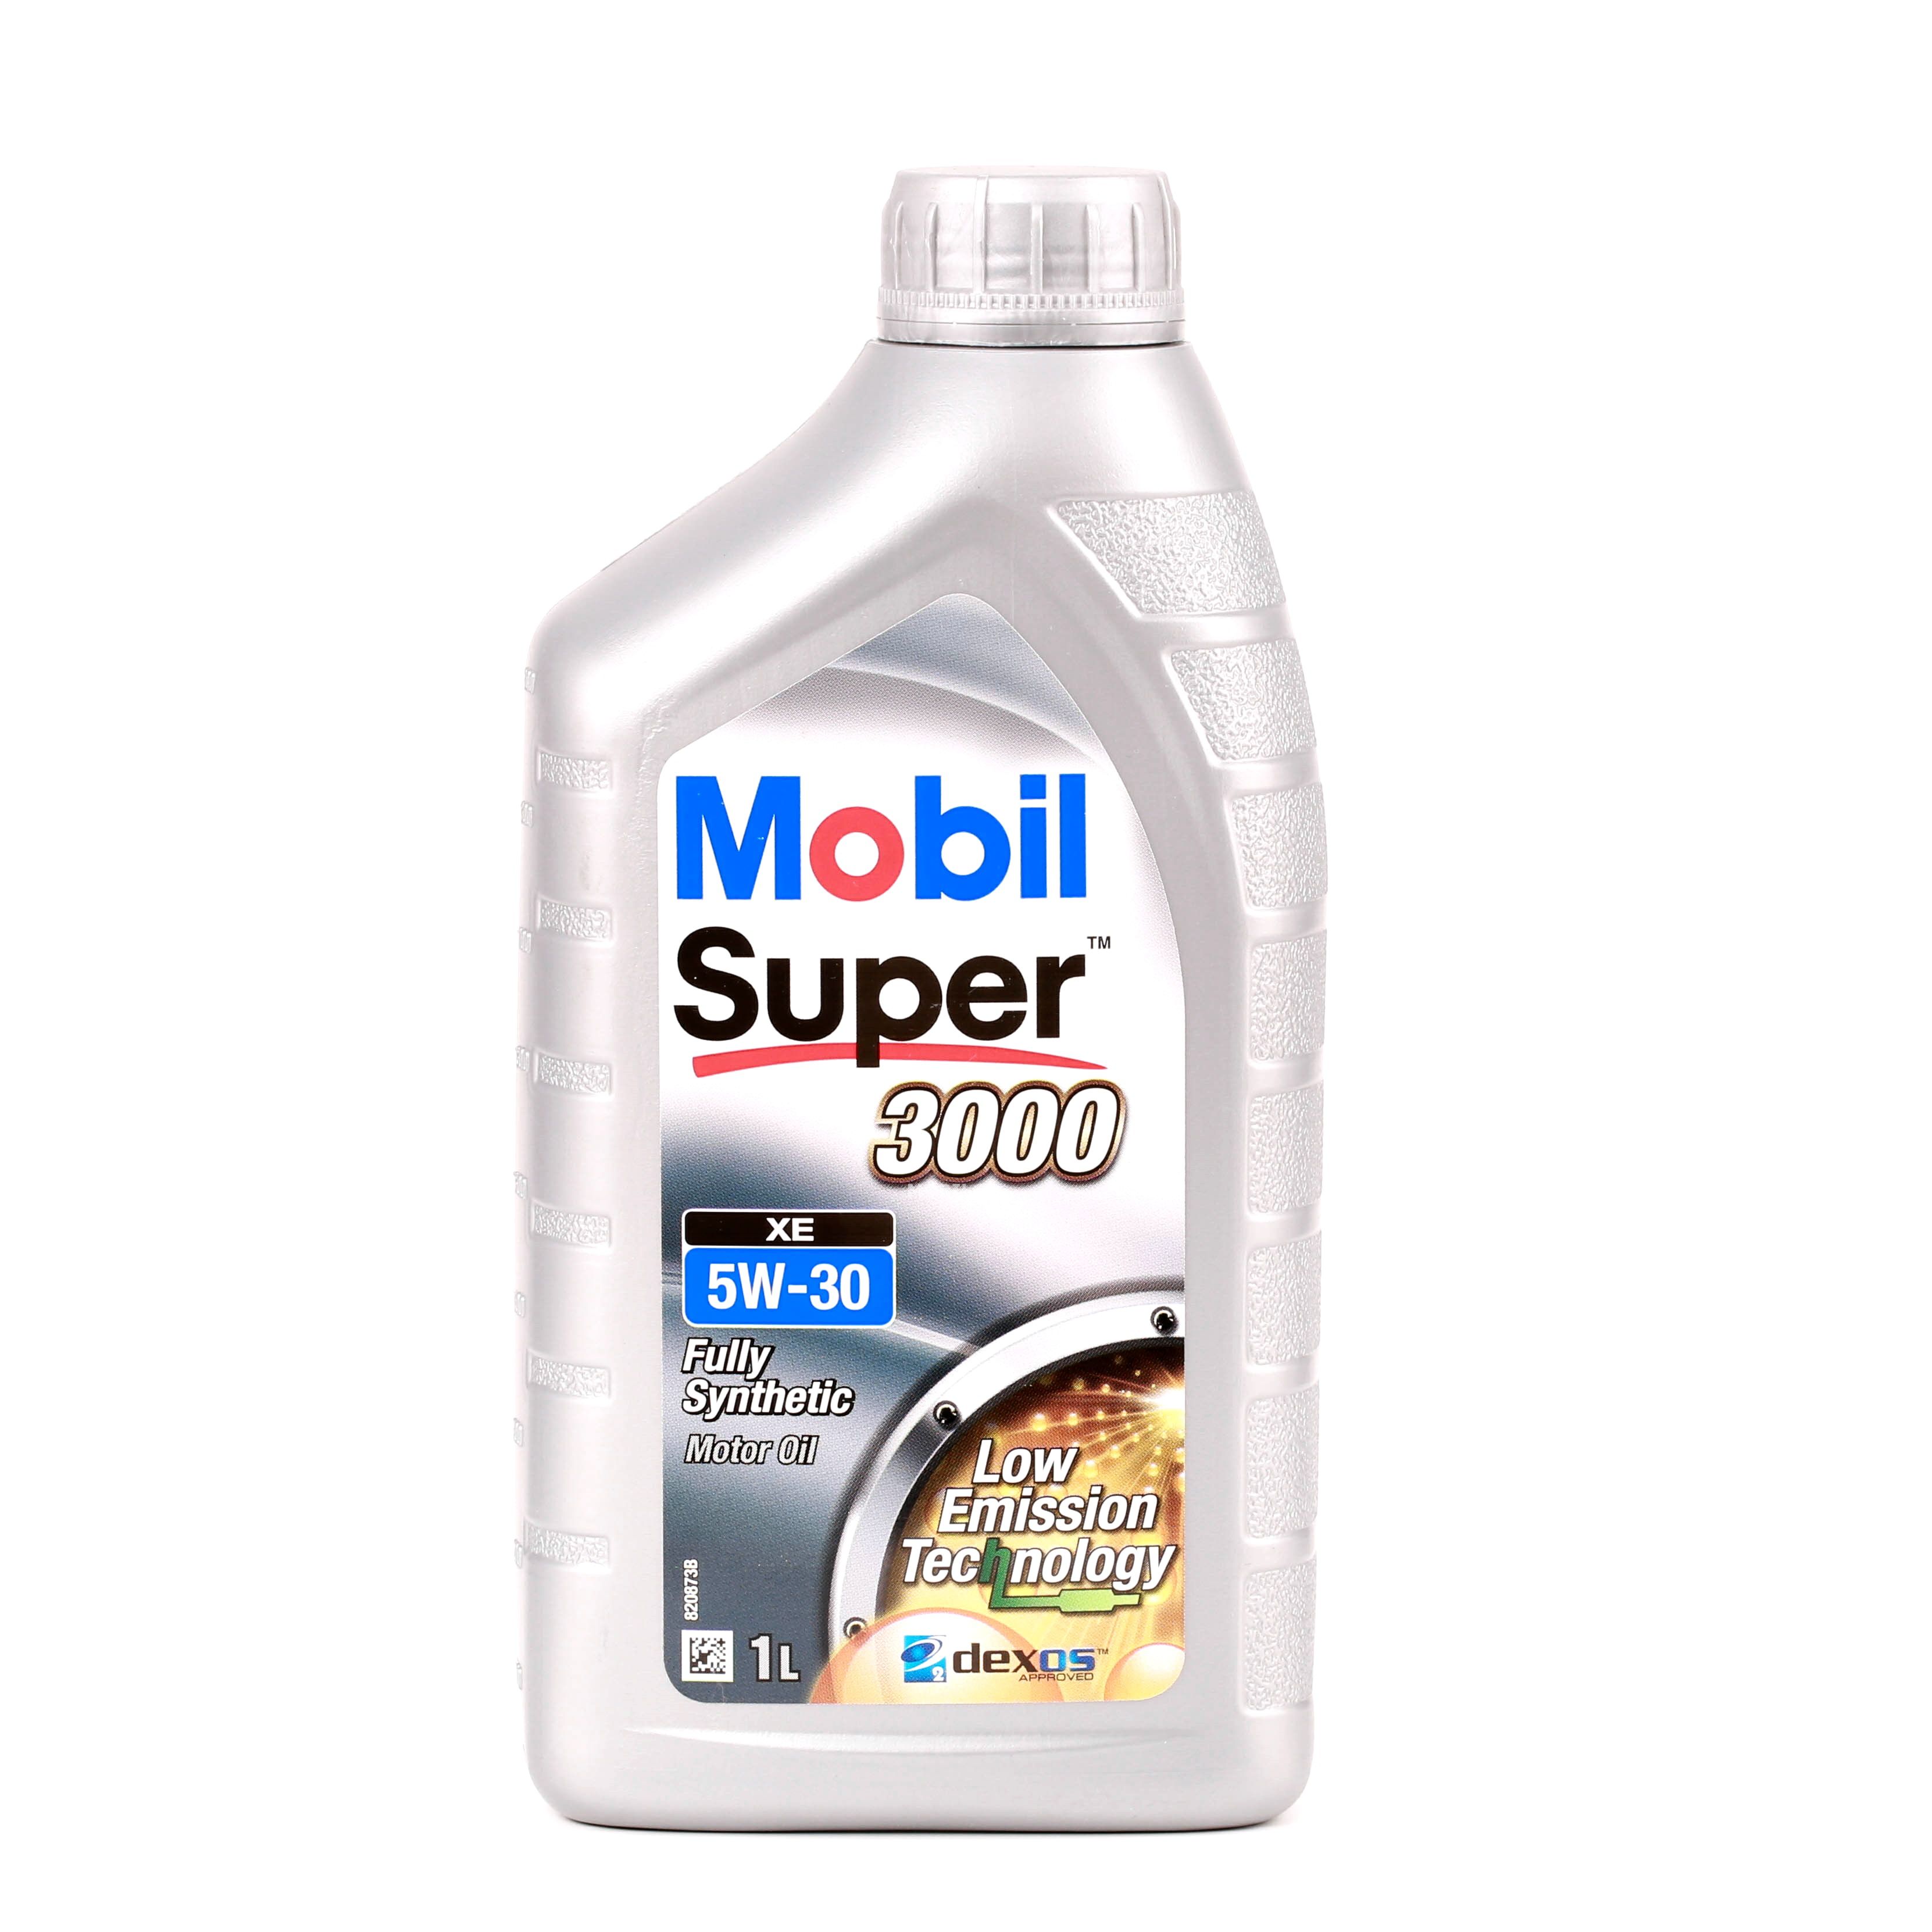 GMLLB25 MOBIL Super, 3000 XE 5W-30, 1l, Synthetiköl Motoröl 151452 günstig